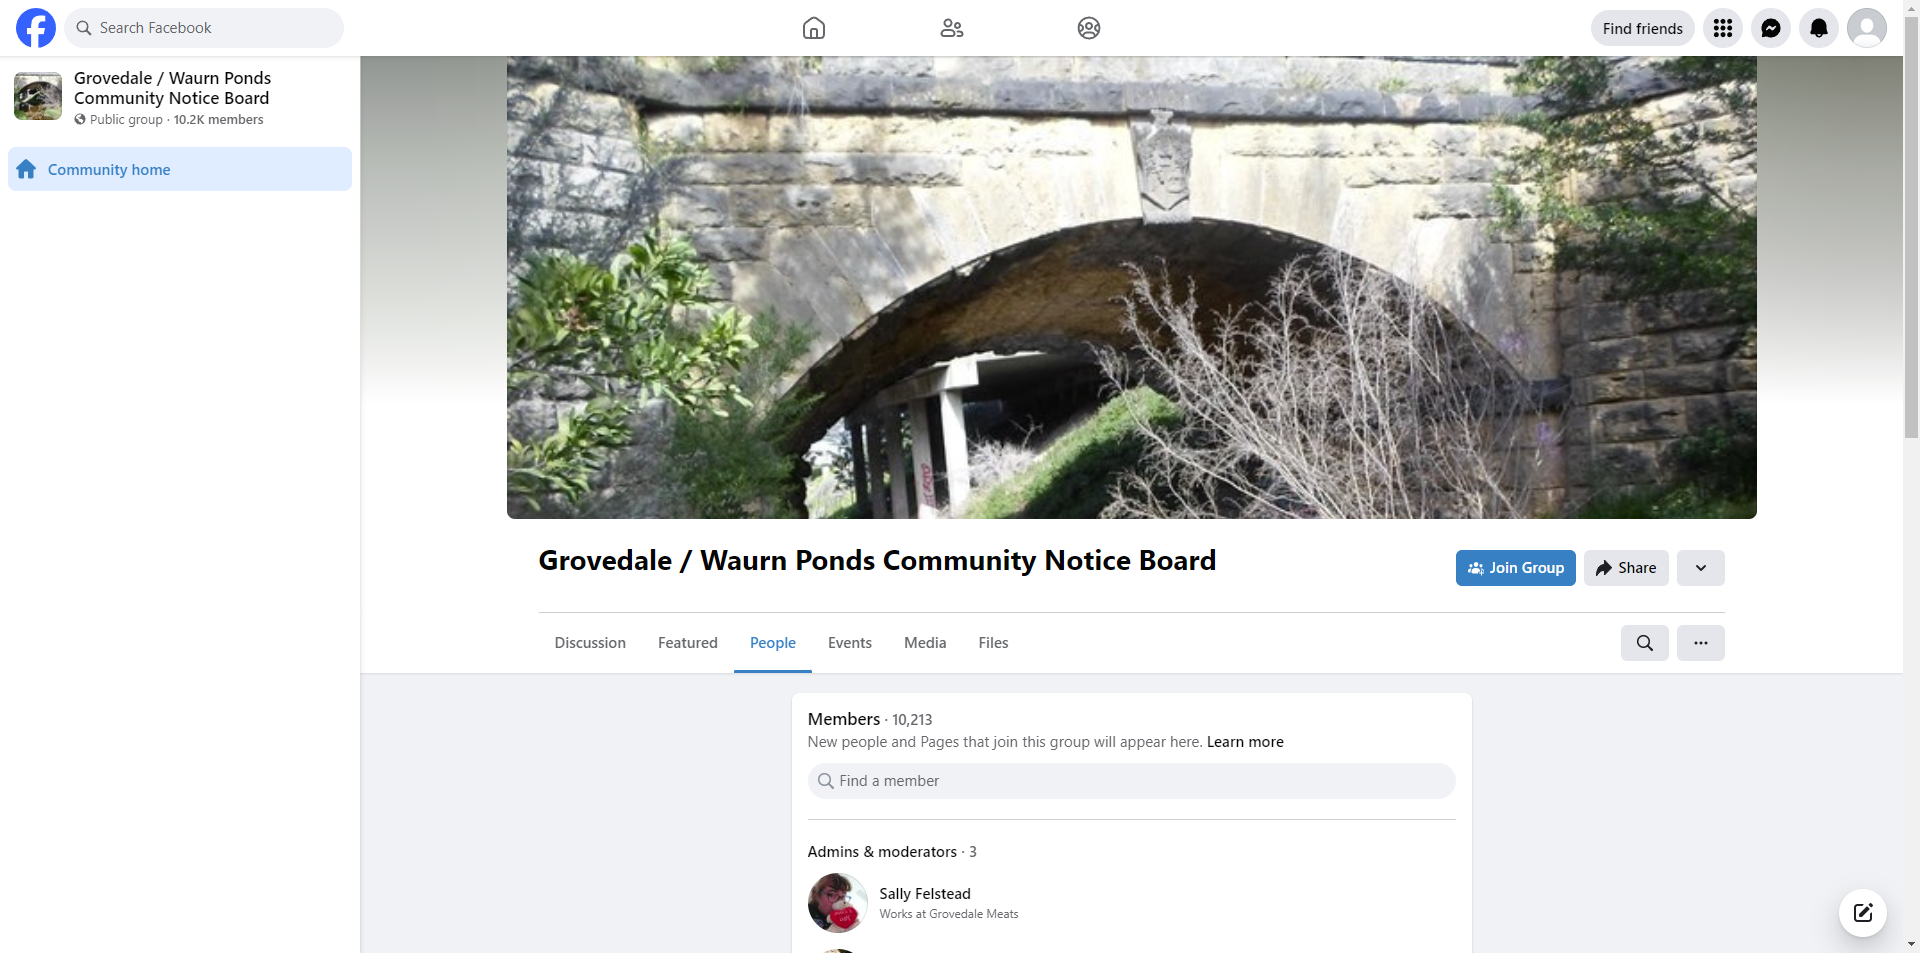 Grovedale/Waurn Ponds Community Notice Board